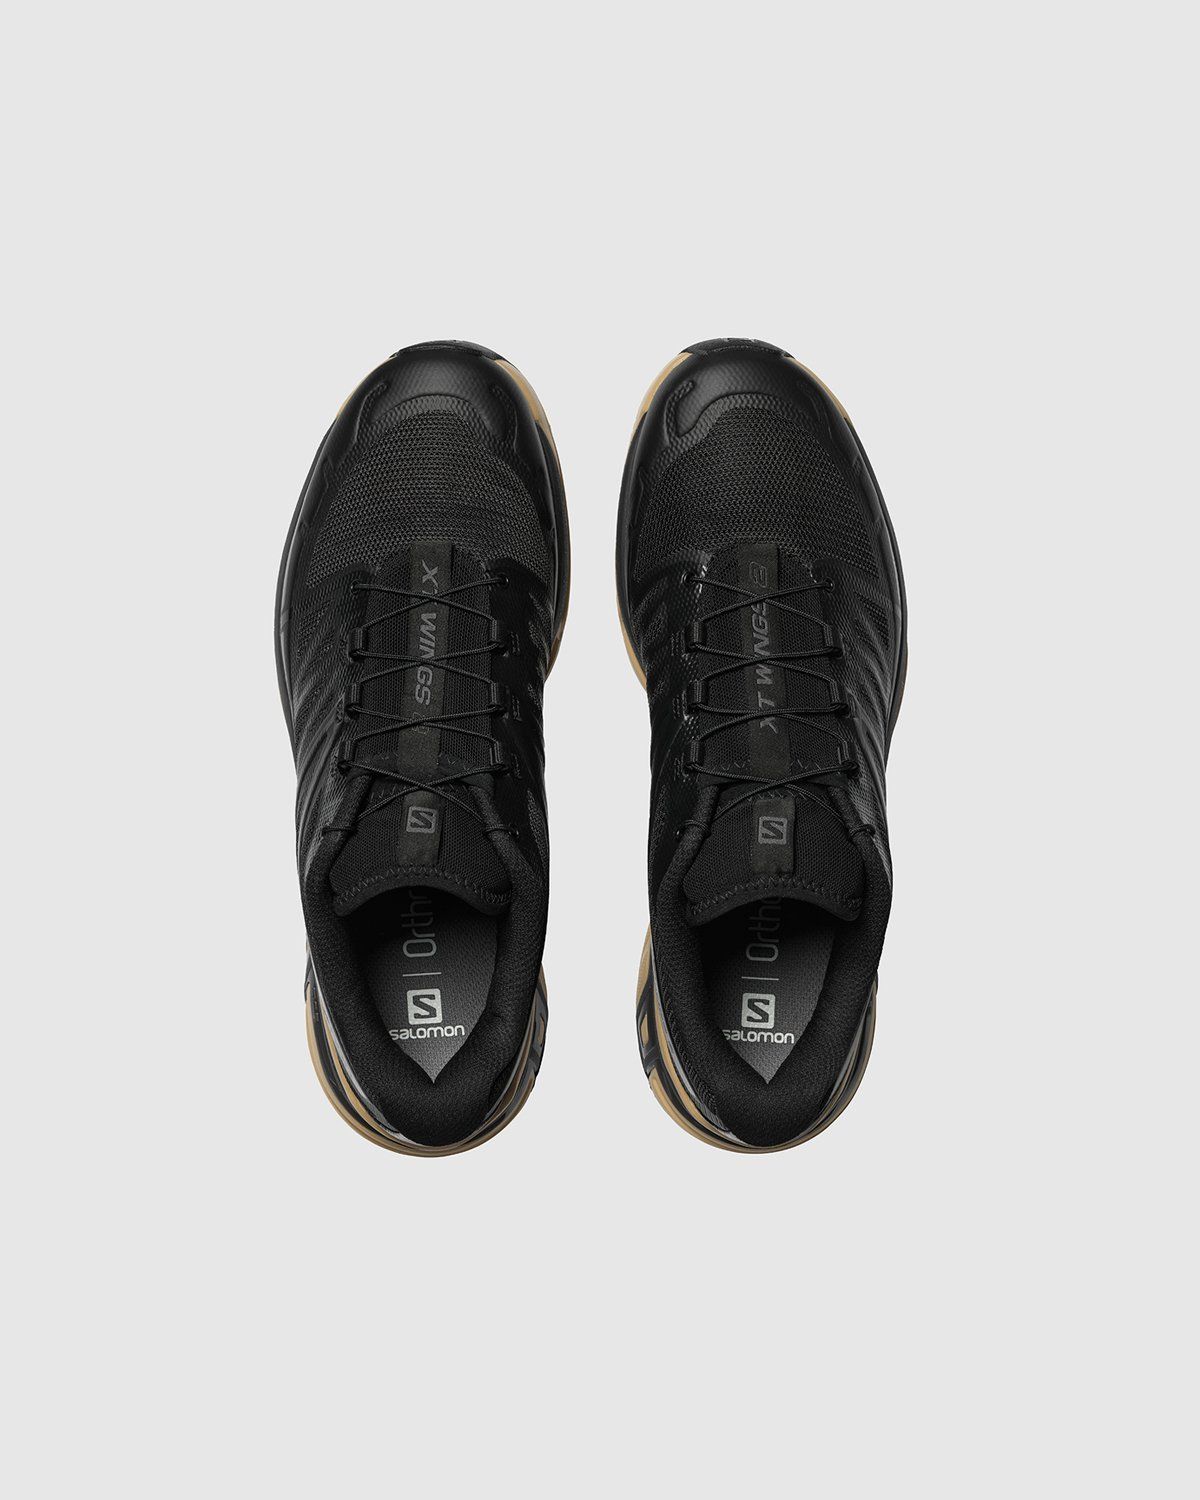 Salomon – XT-WINGS 2 ADVANCED Black/Safari/Magnet - Sneakers - Black - Image 3